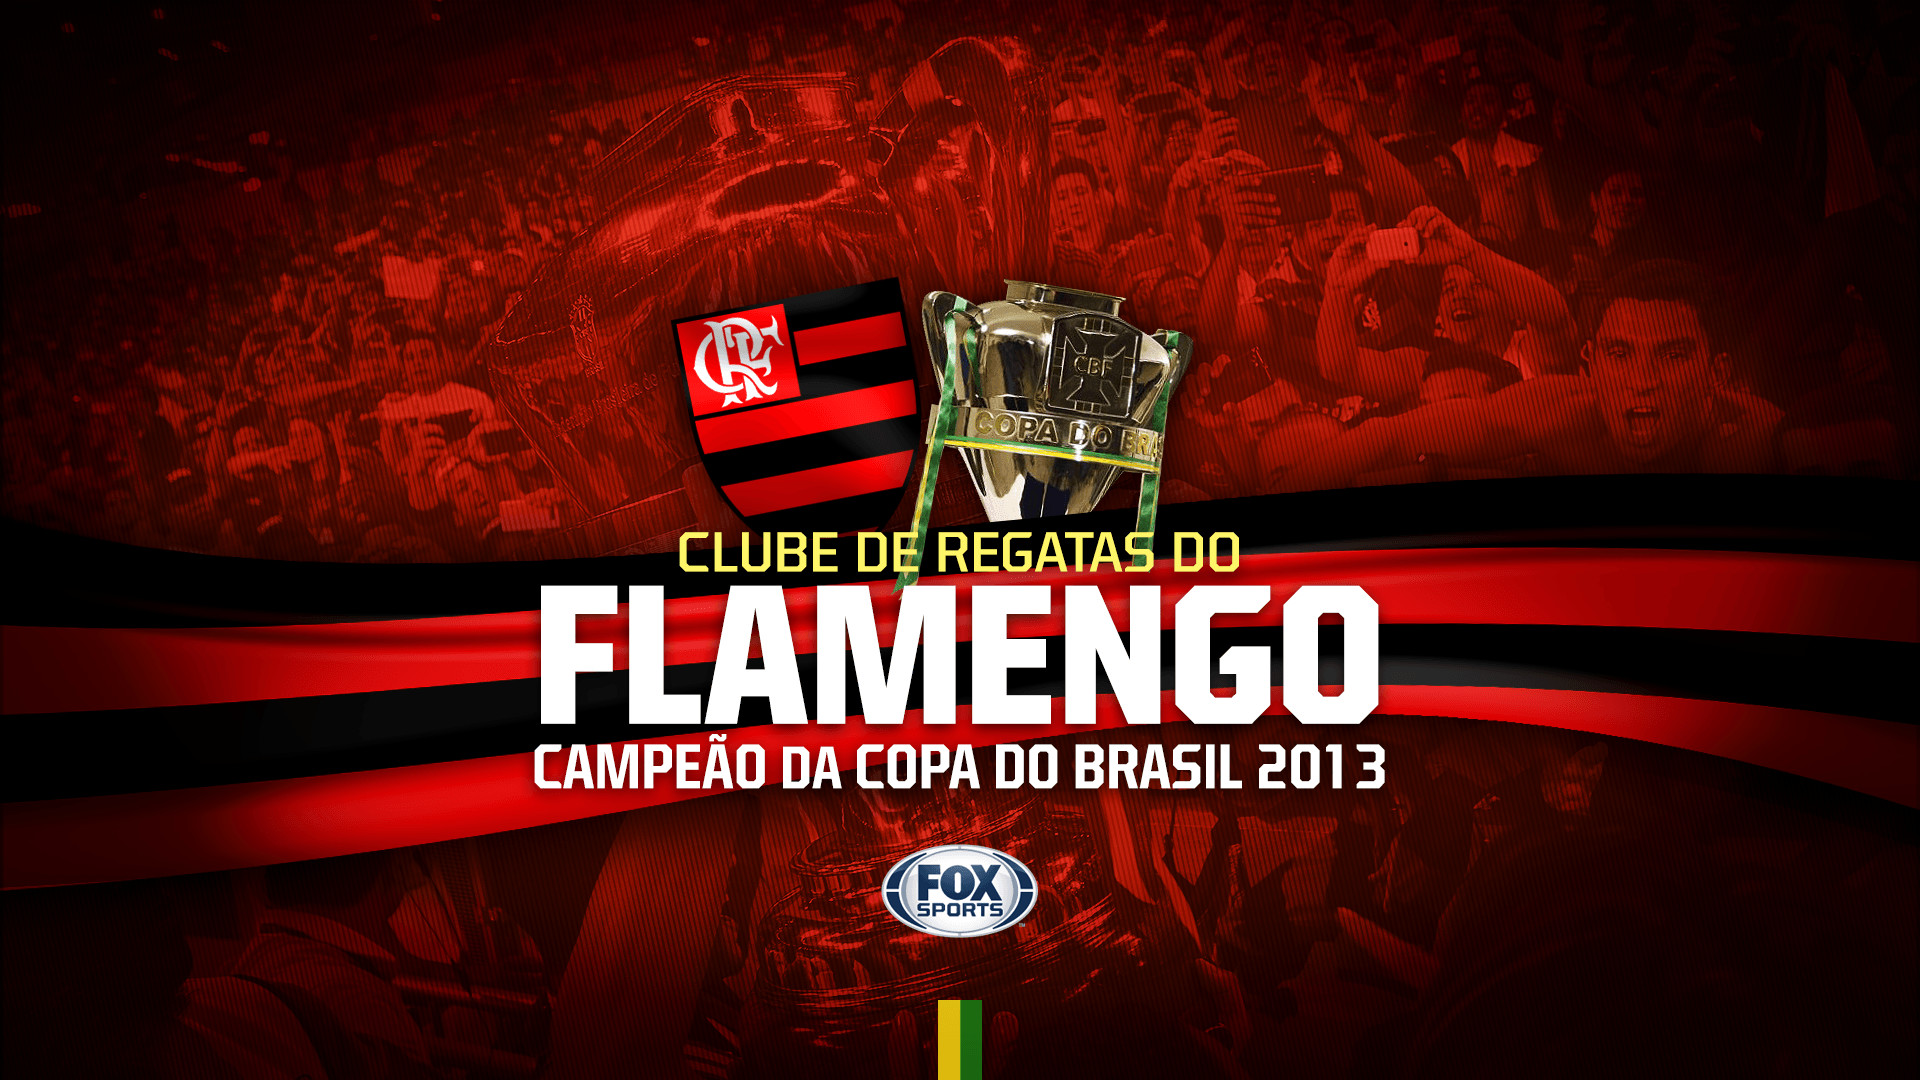 1920x1080 Baixe o wallpaper do Flamengo campeÃ£o da Copa do Brasil | FOX Sports